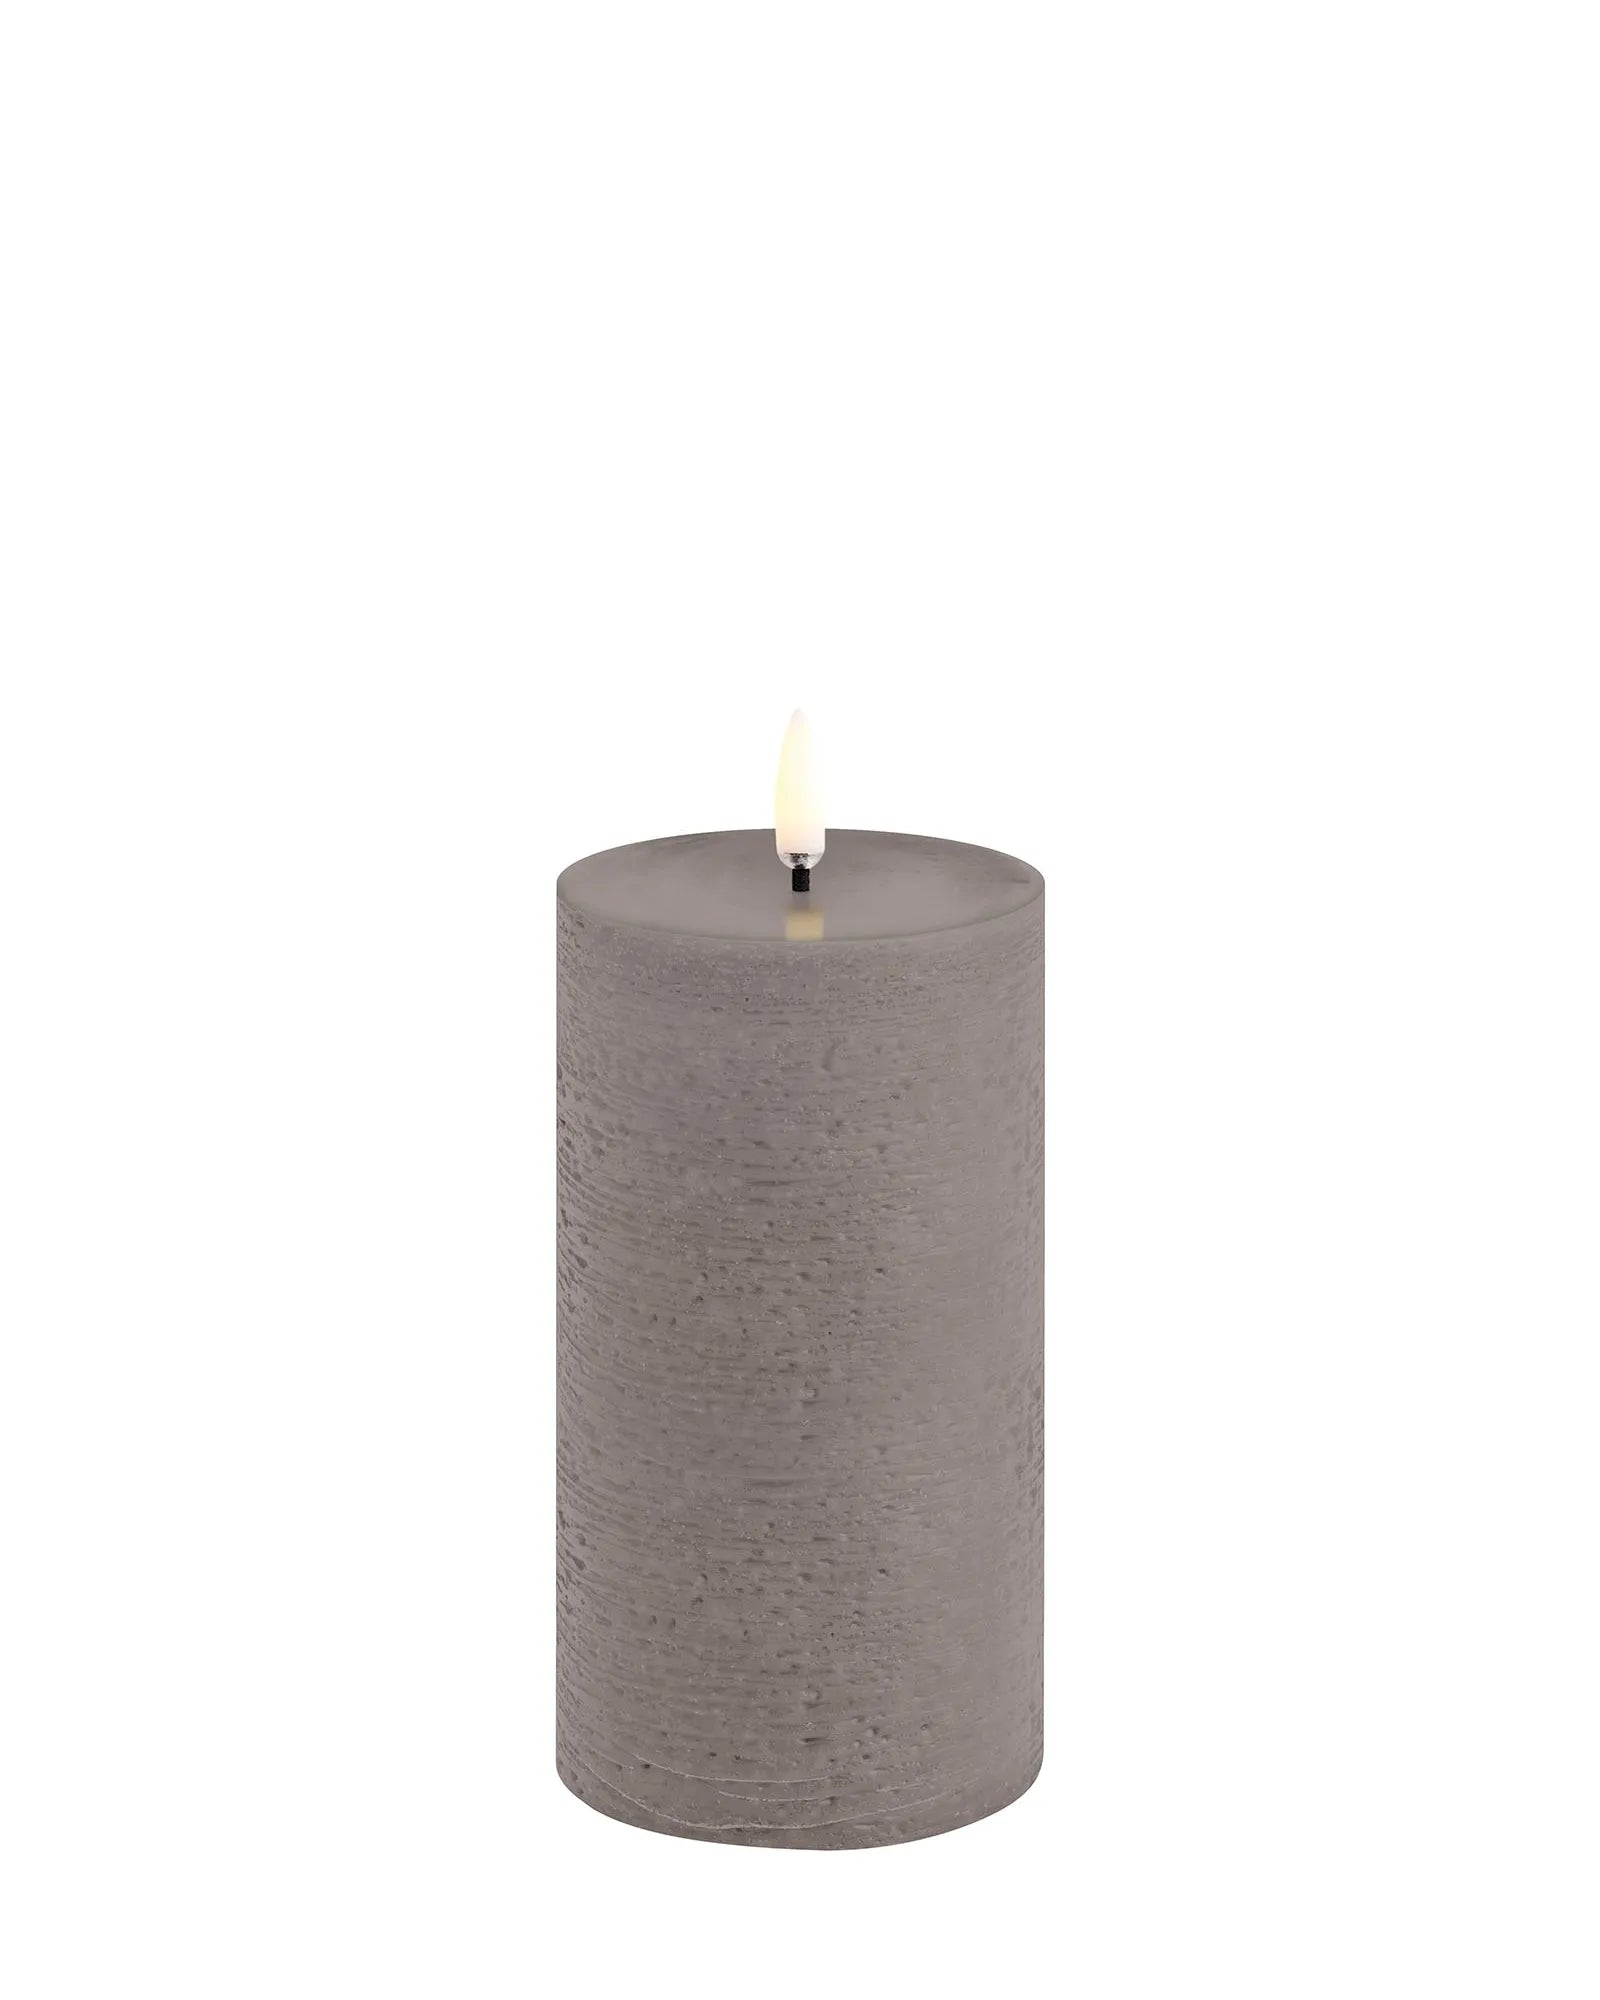 LED Pillar Candle - Sandstone